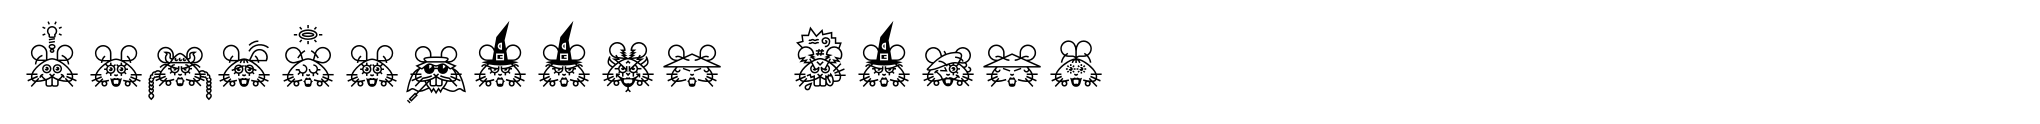 GarciaToons Mouse image